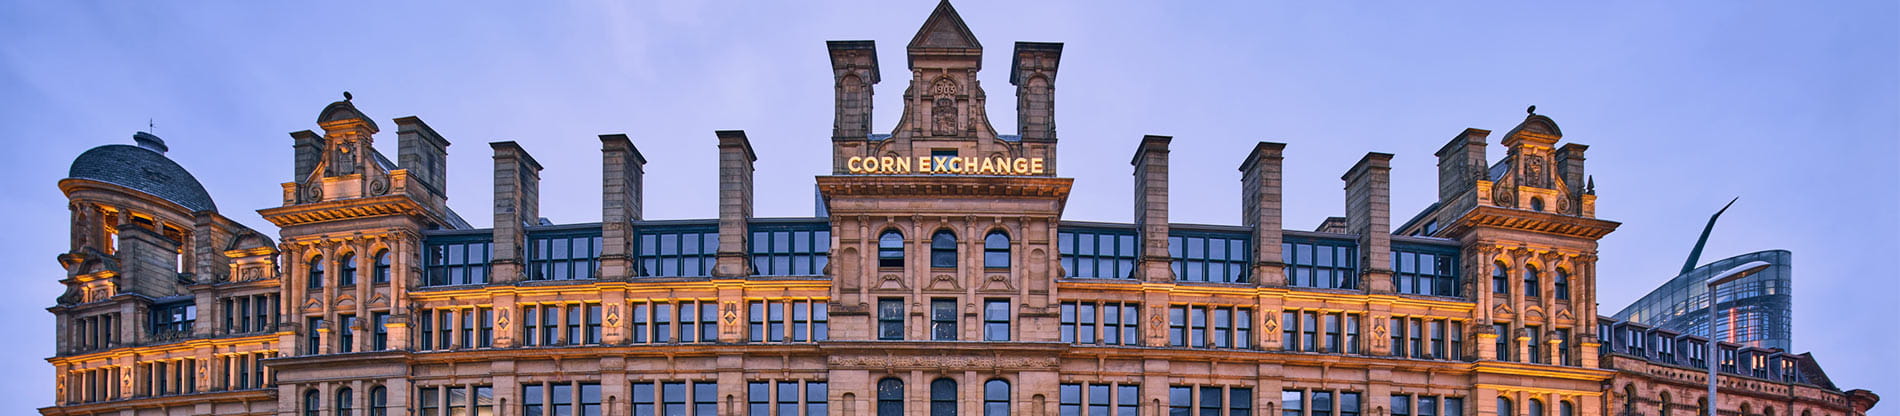 Corn-Exchange-refurbishment--ISG